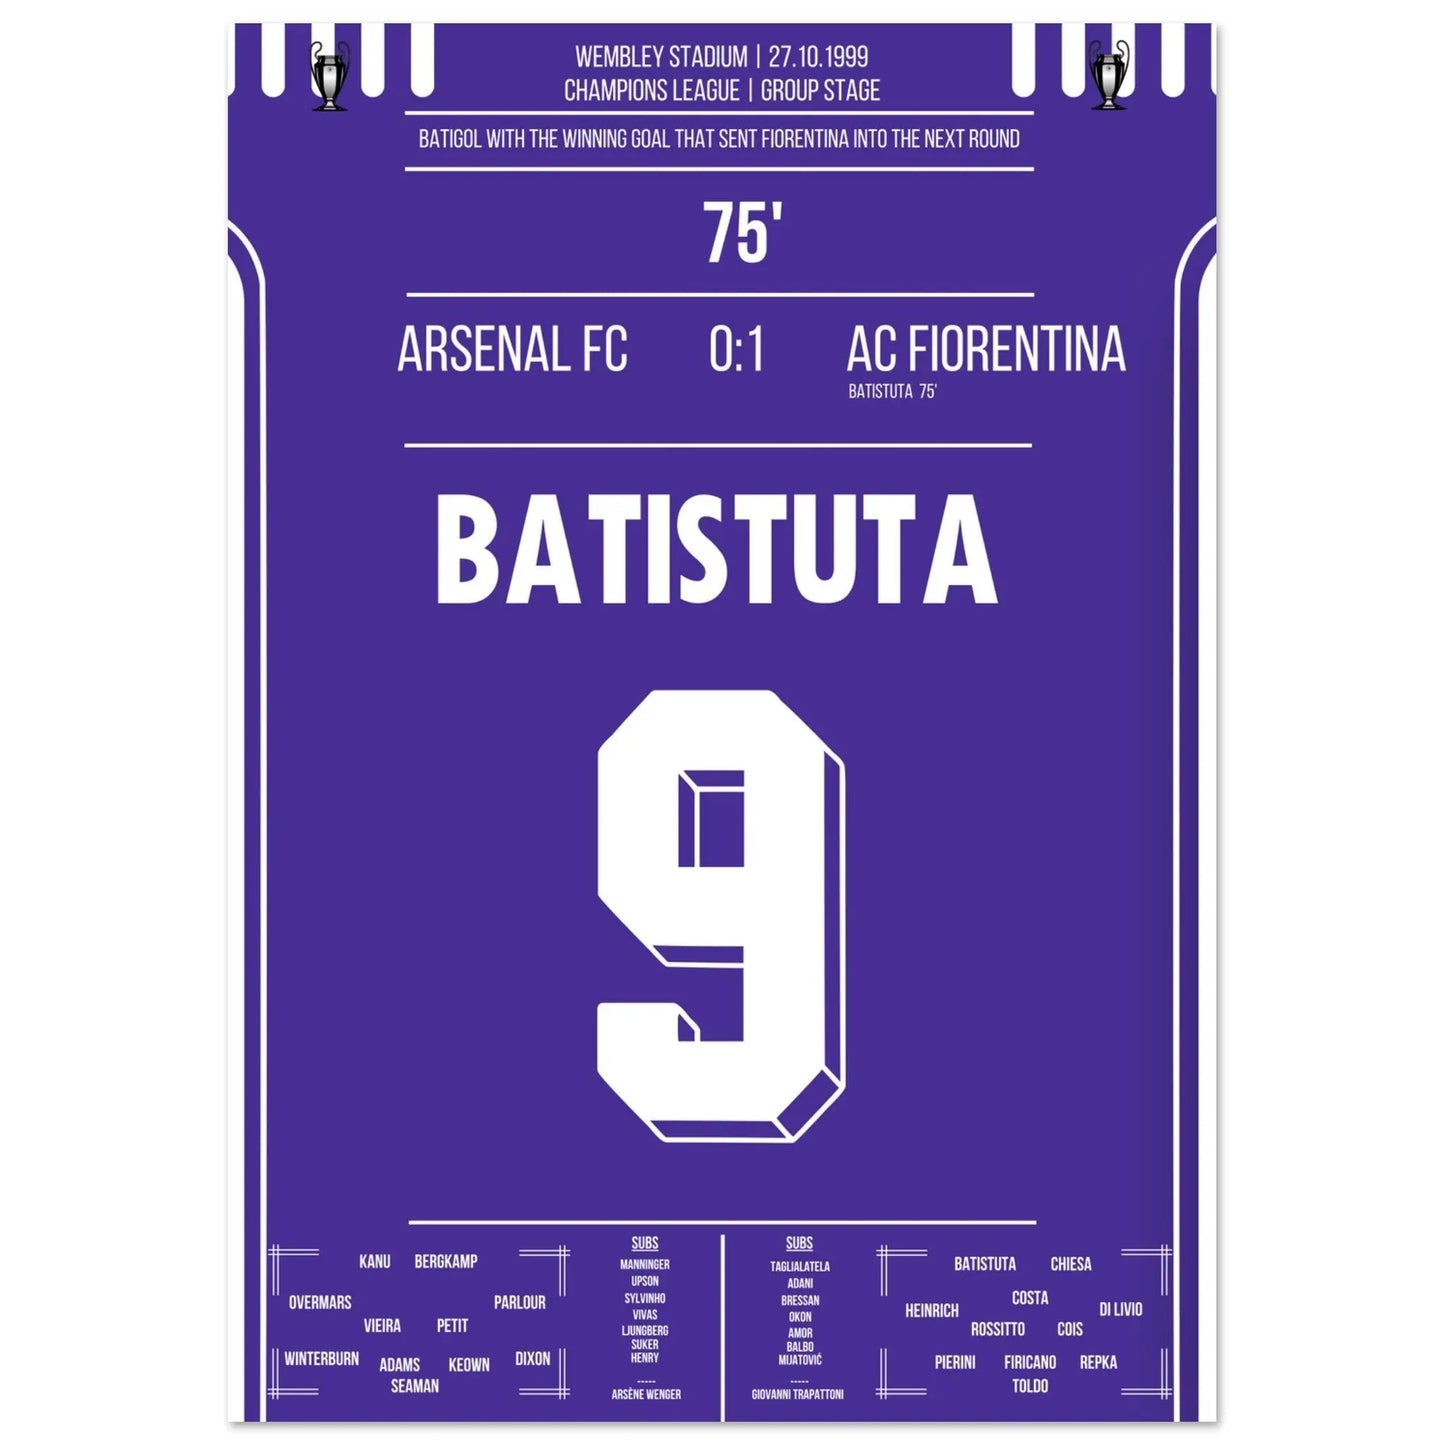 Batistuta shoots Fiorentina into the next round of the 1999/00 Champions League